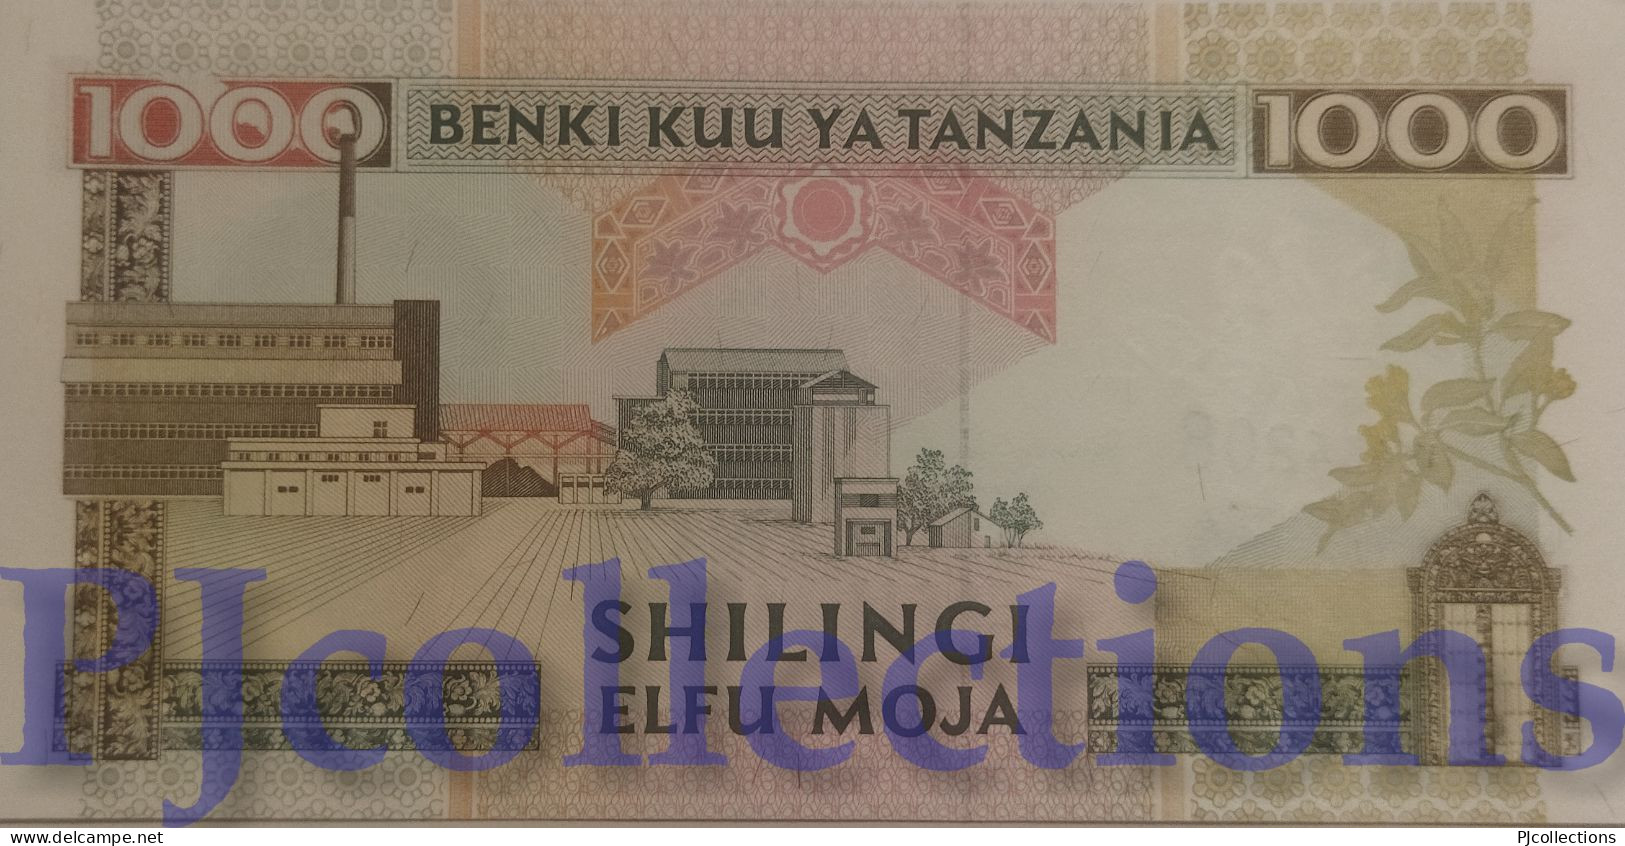 TANZANIA 1000 SHILINGI 1993 PICK 27c UNC - Tanzania